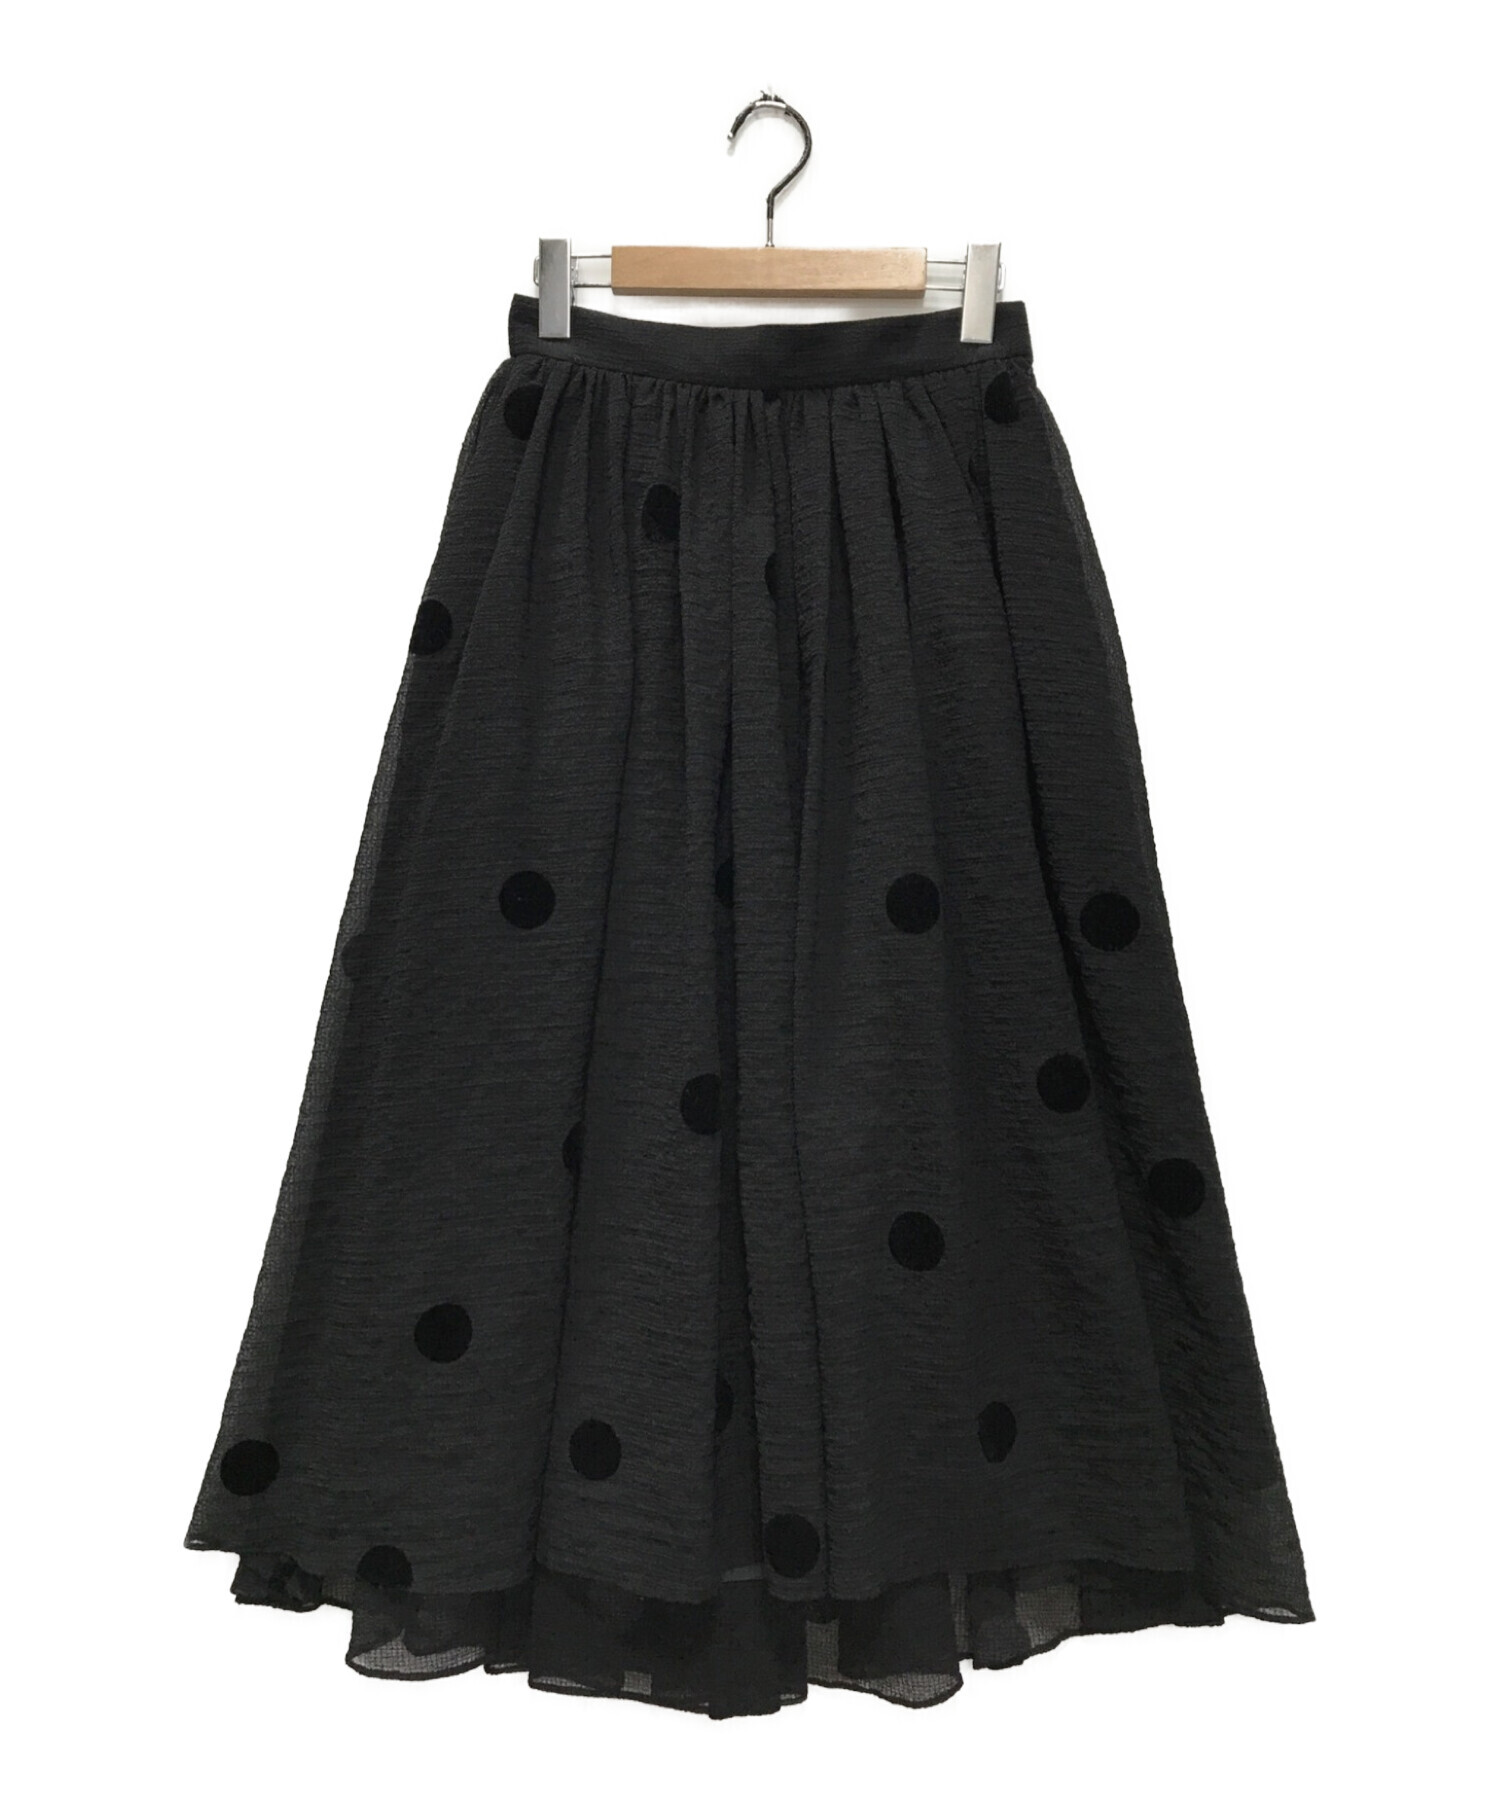 SHE tokyo (シートーキョー) オードリードットスカート ブラック サイズ:36